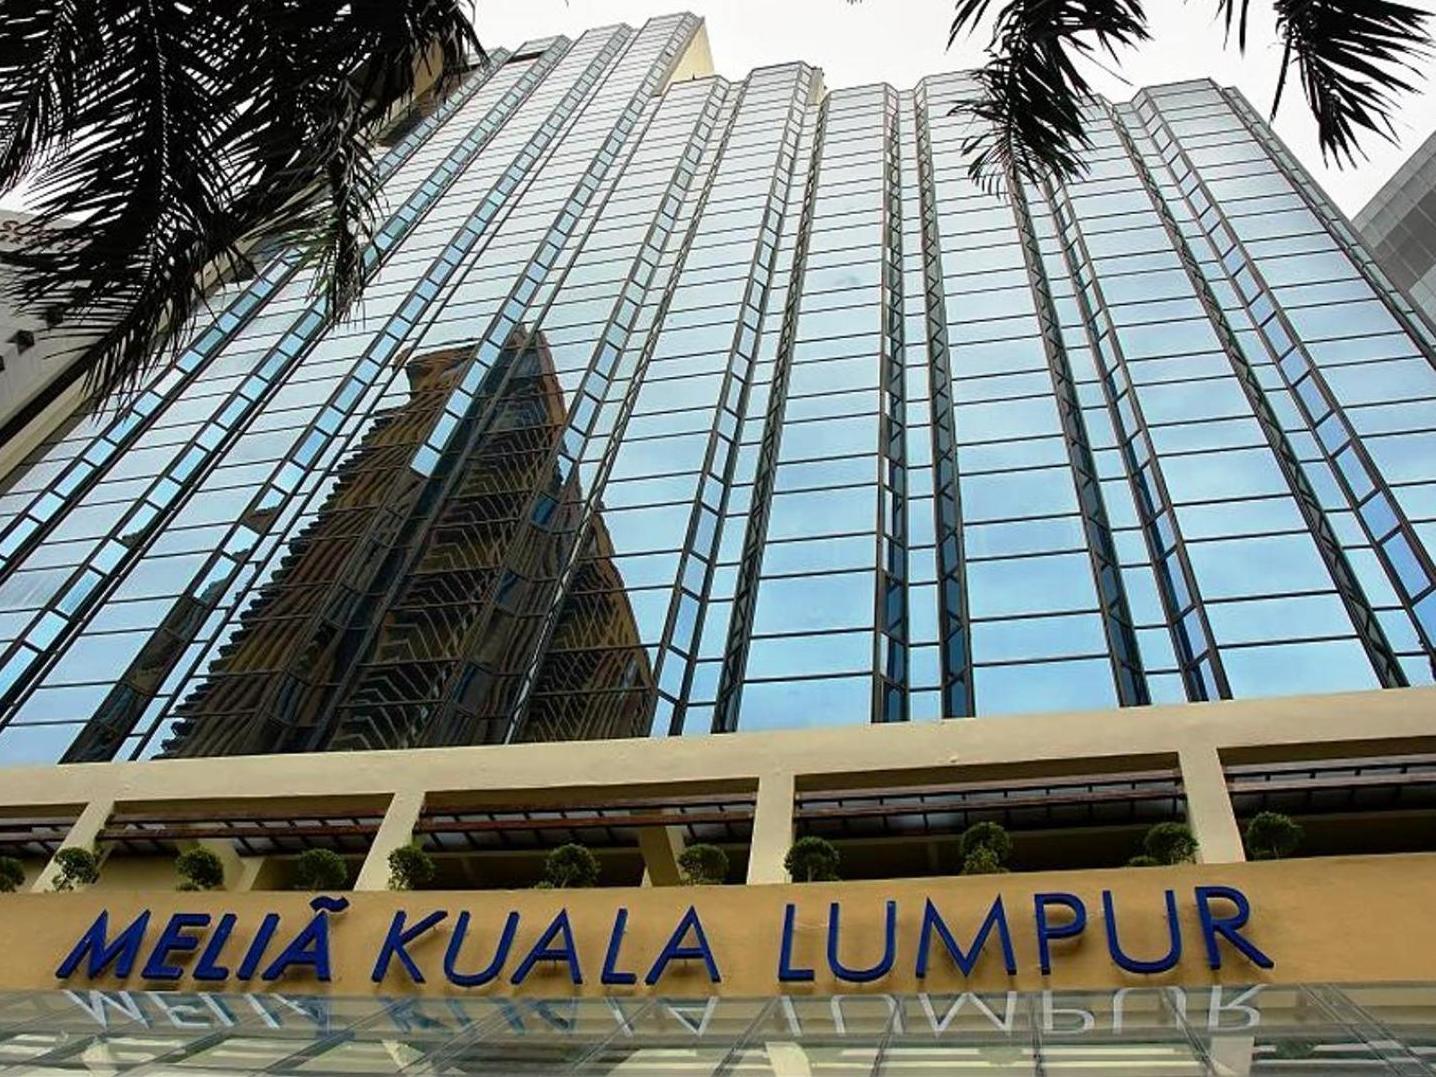 The Melia Kuala Lumpur intro 2017